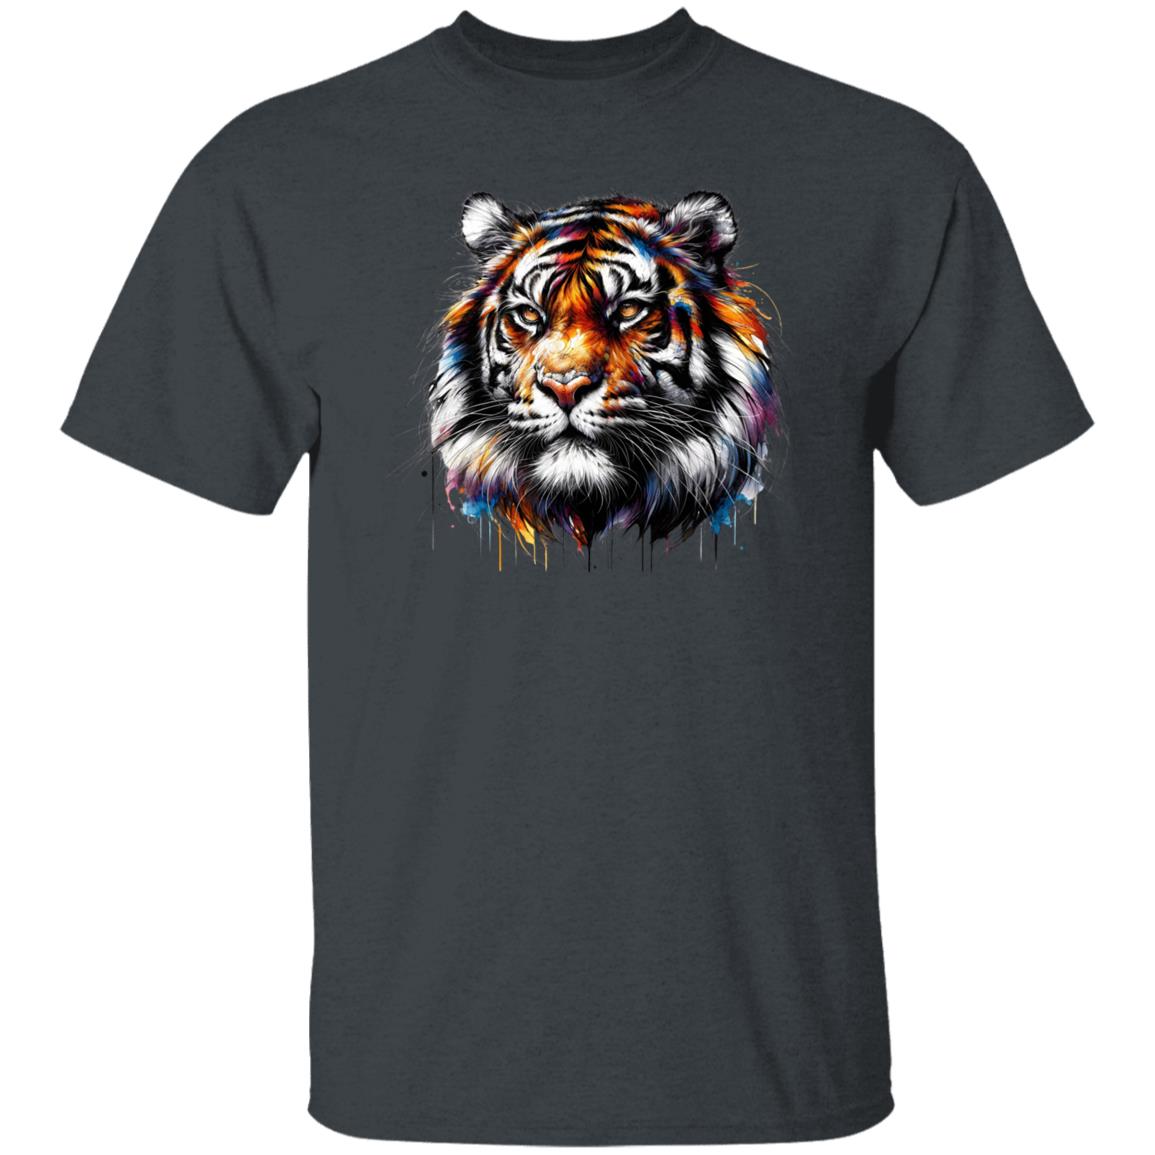 Vibrant Tiger Unisex T-shirt animal lover tee Black Navy Dark Heather-Family-Gift-Planet